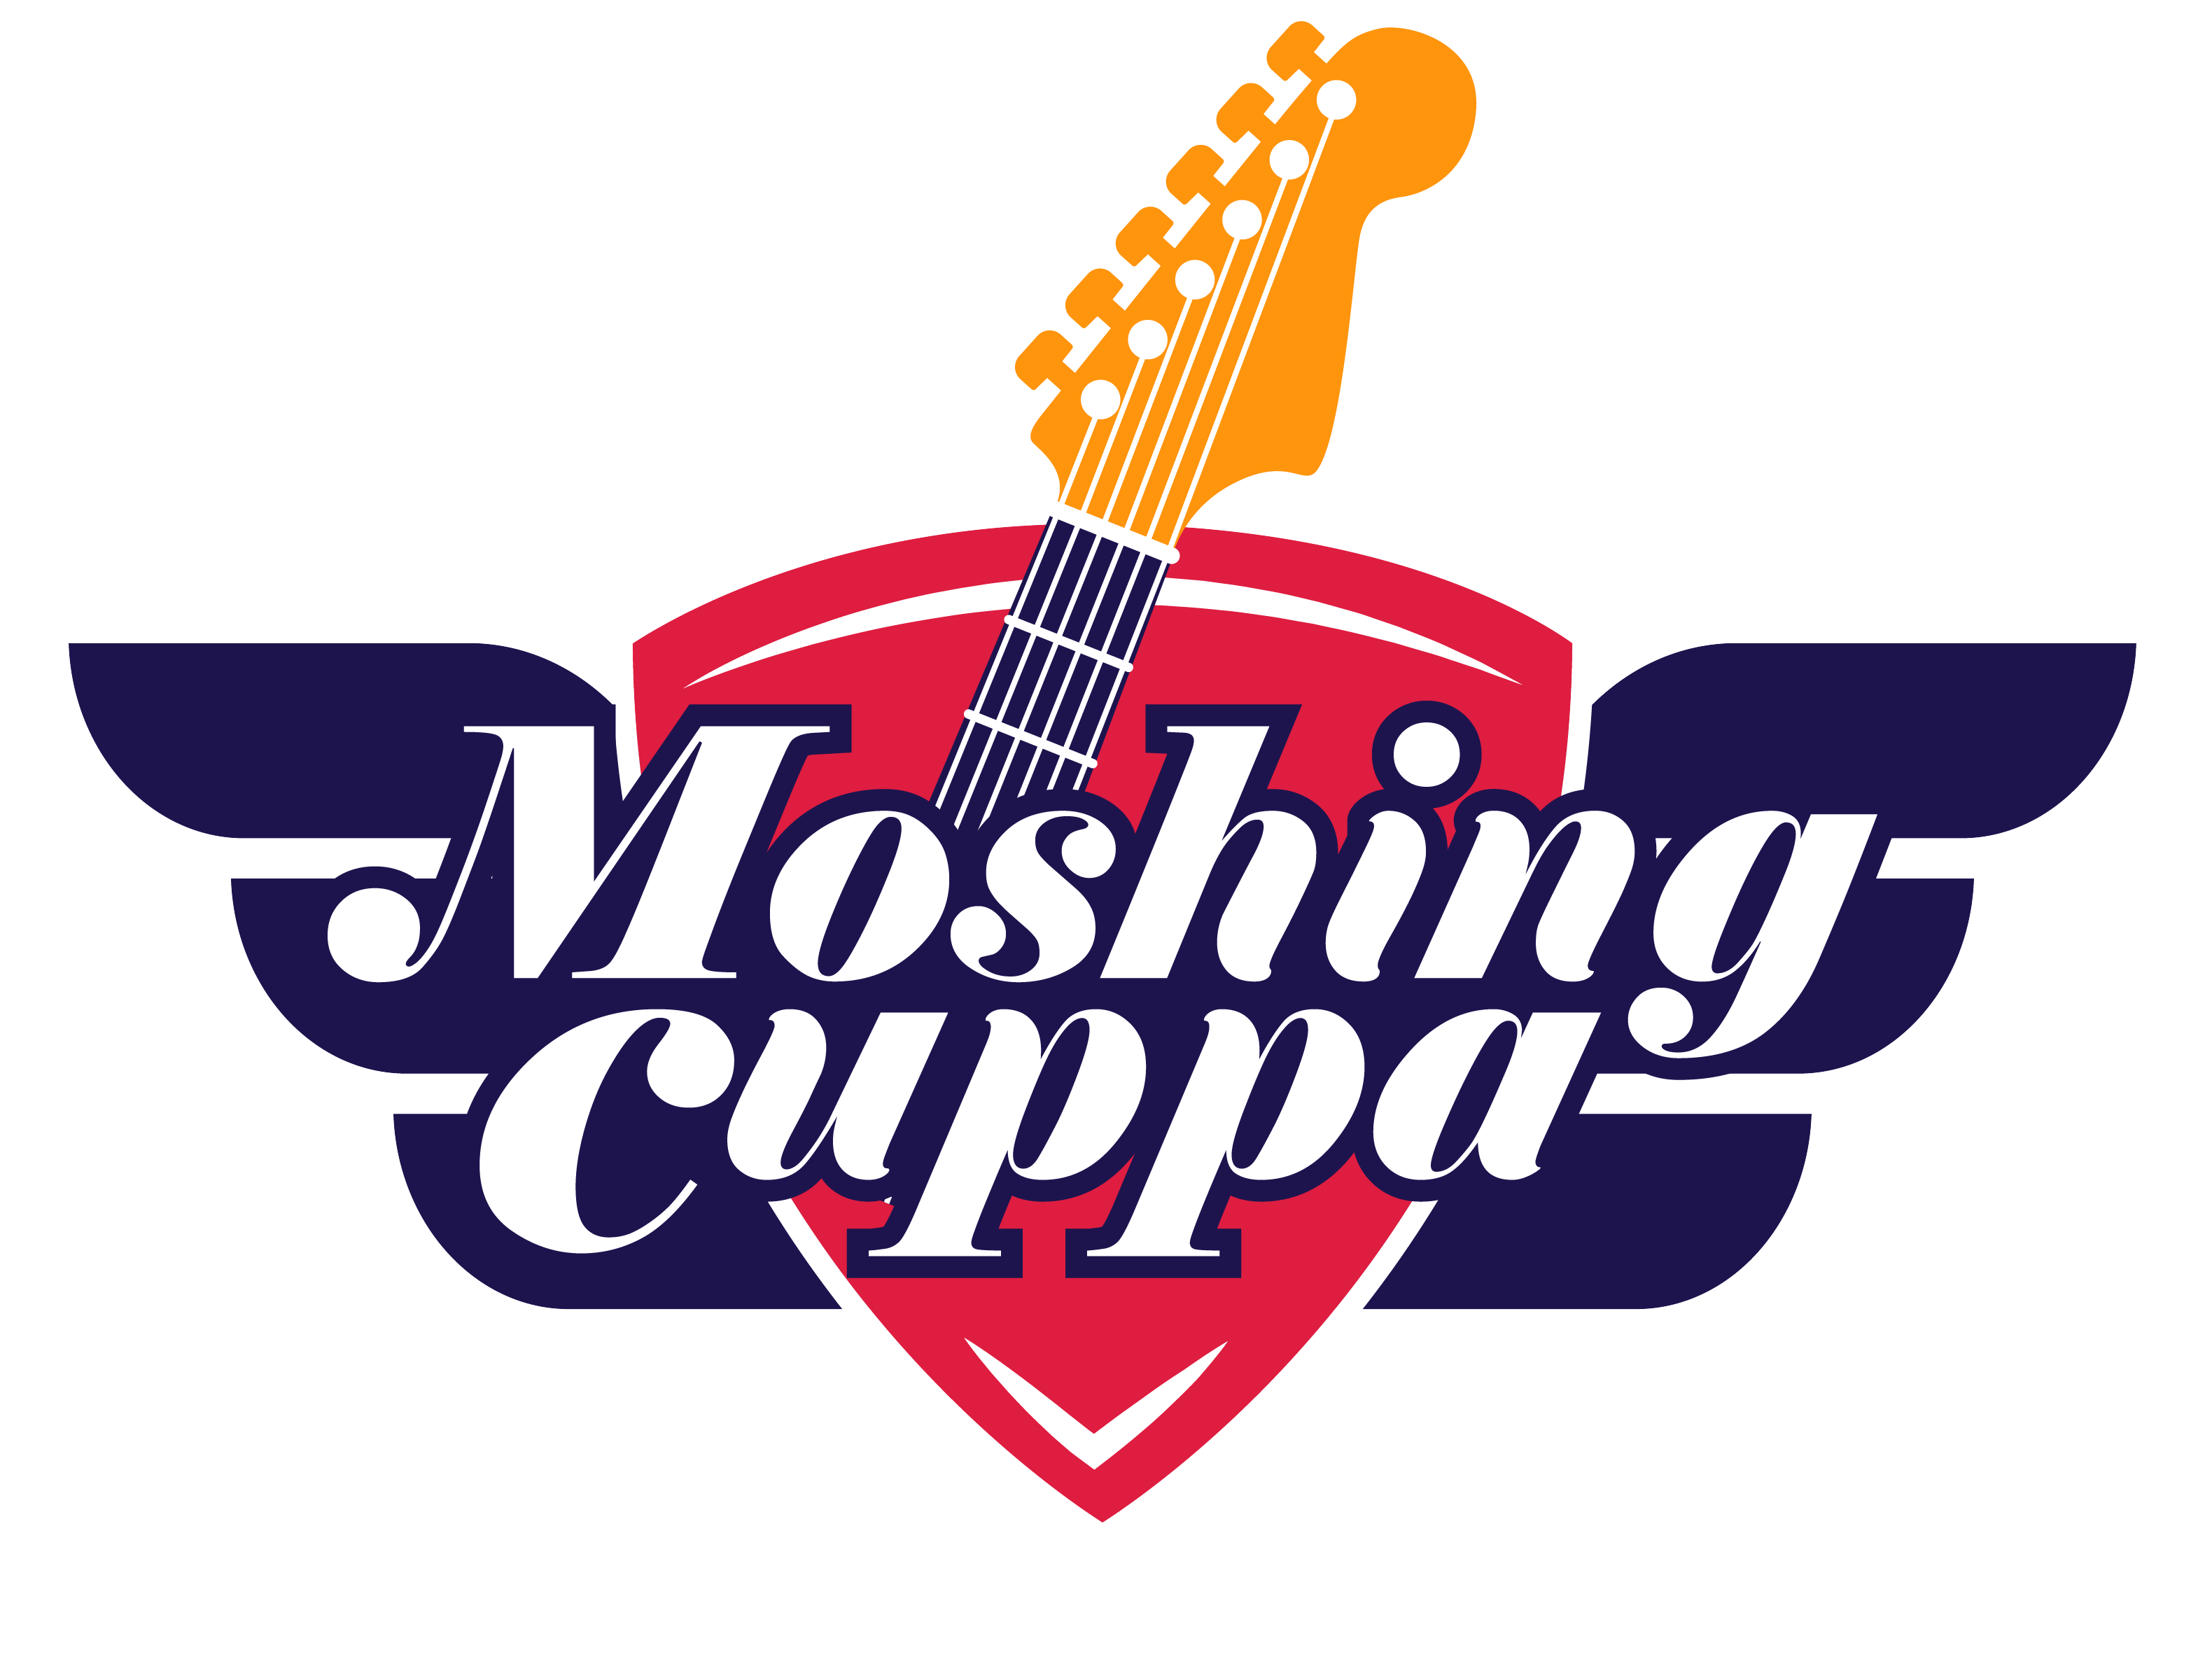 Moshing Cuppa logo